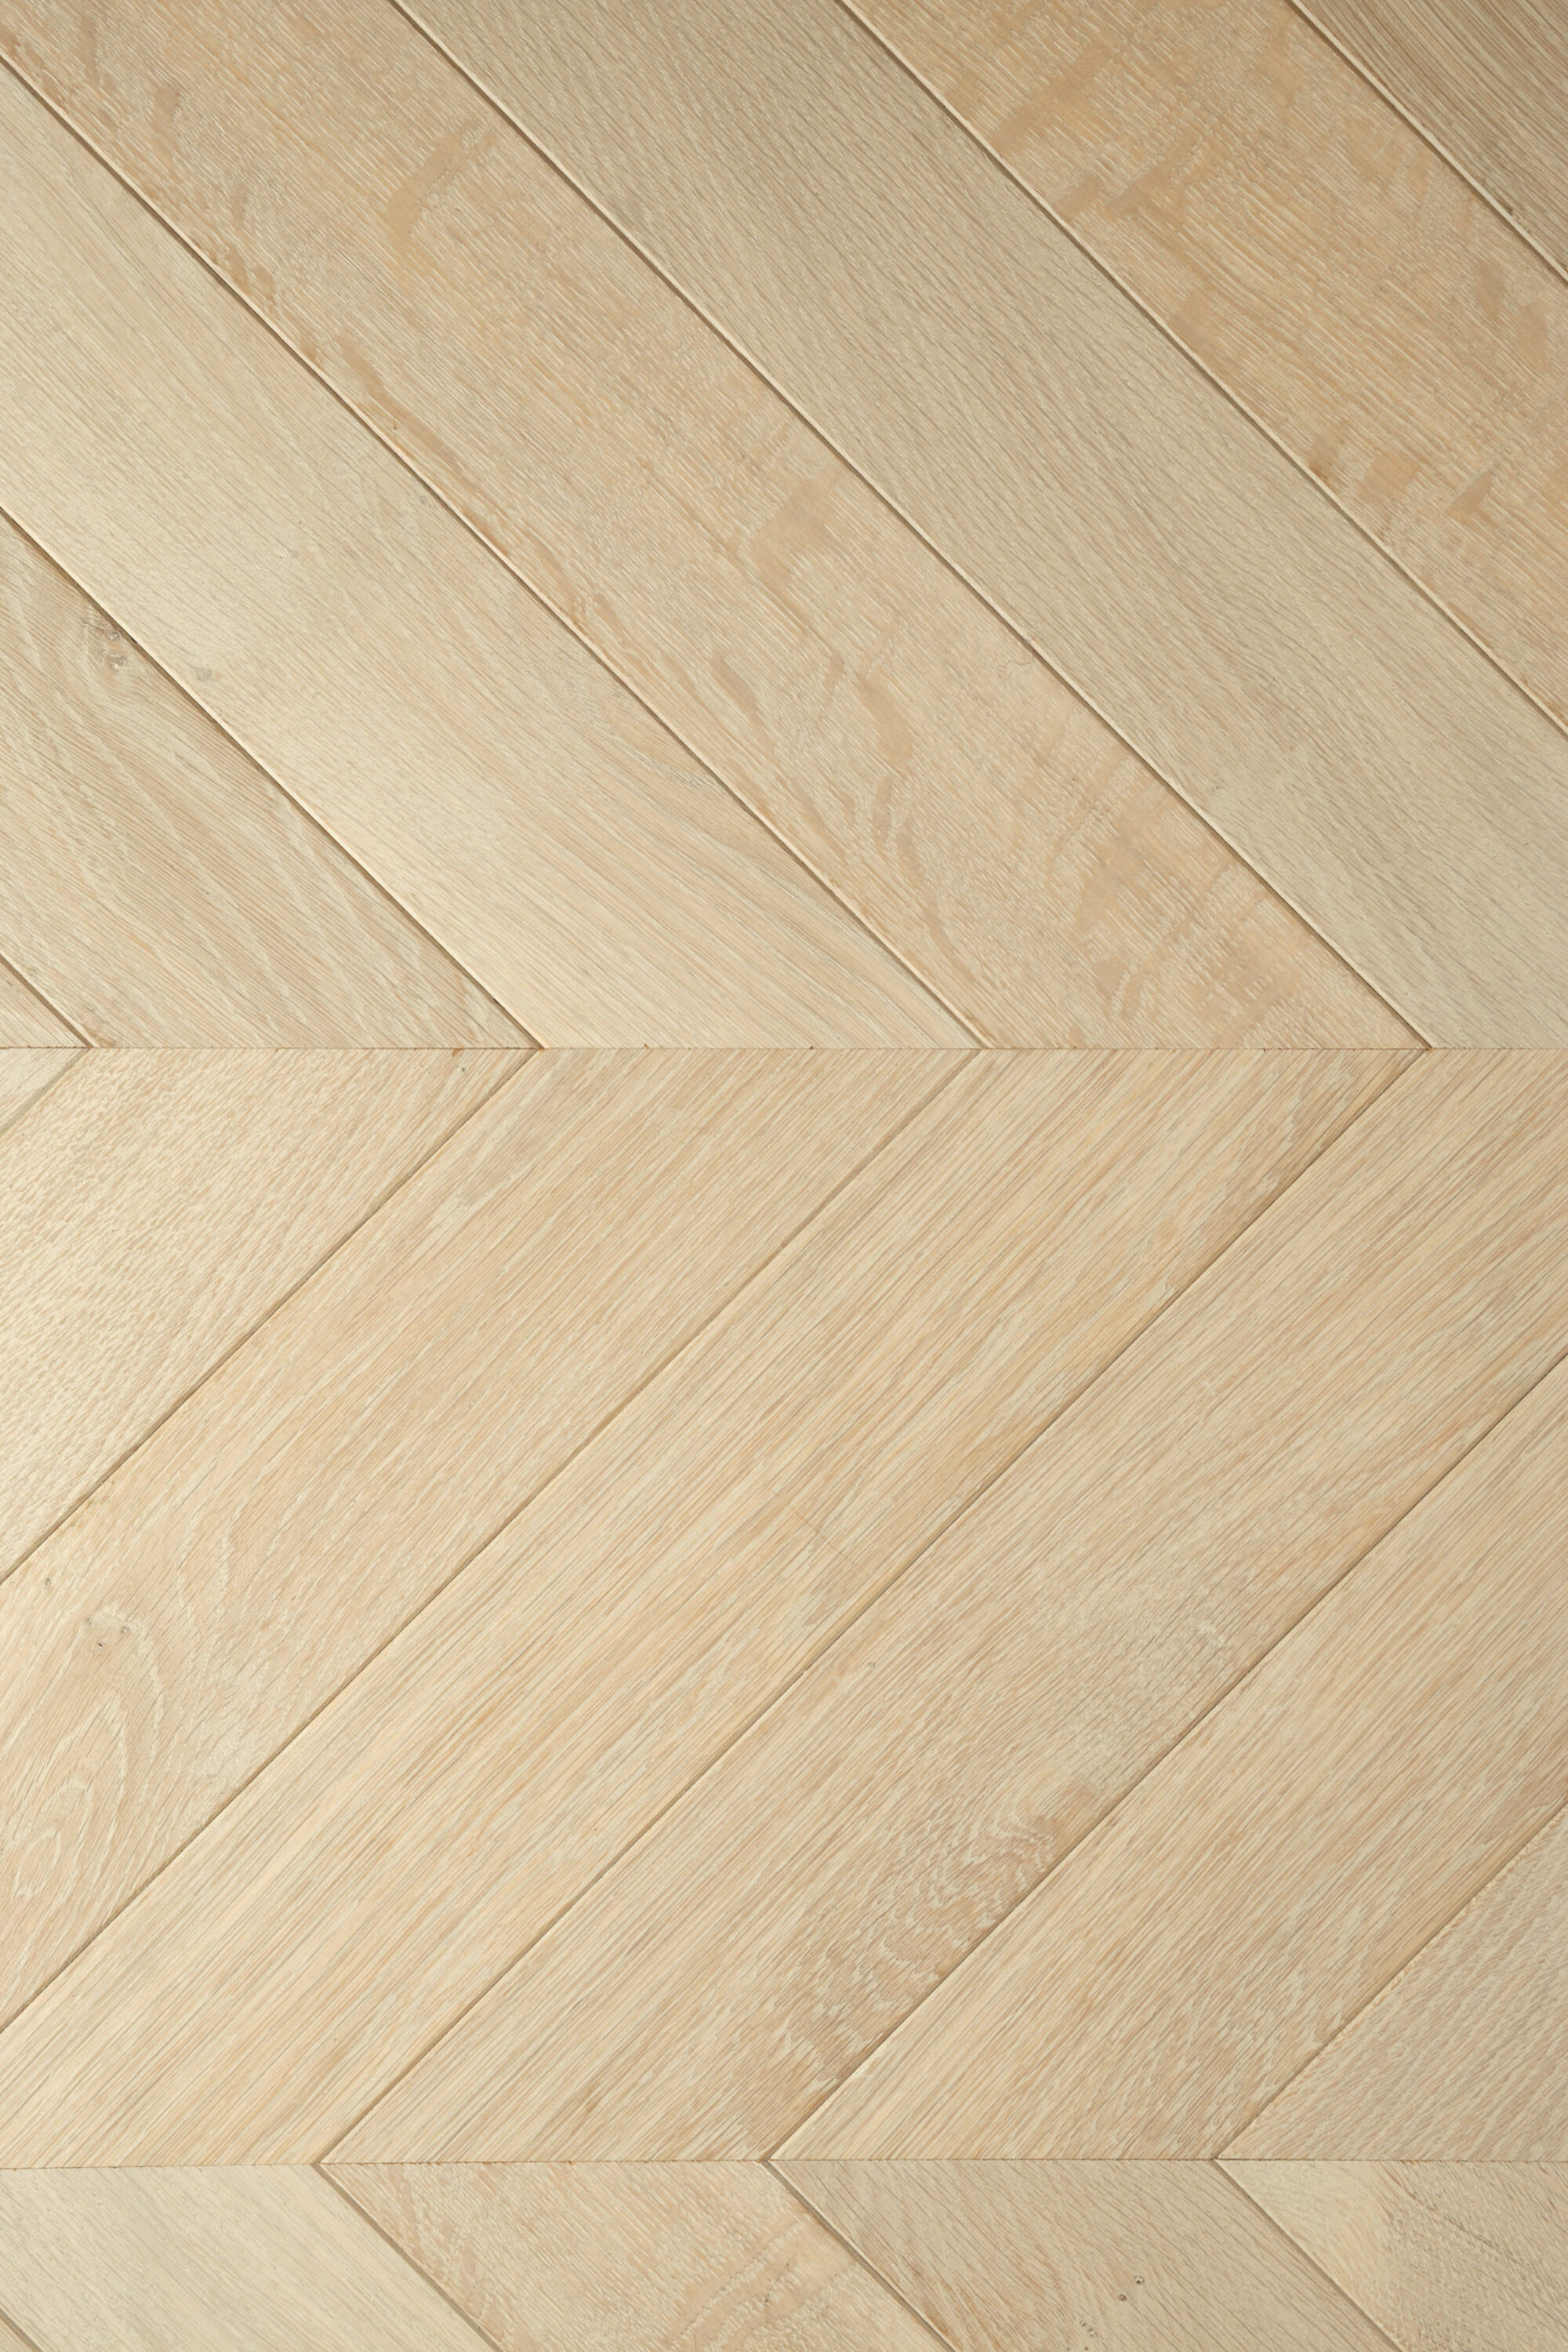 landmark ascott chevron parquet oak flooring